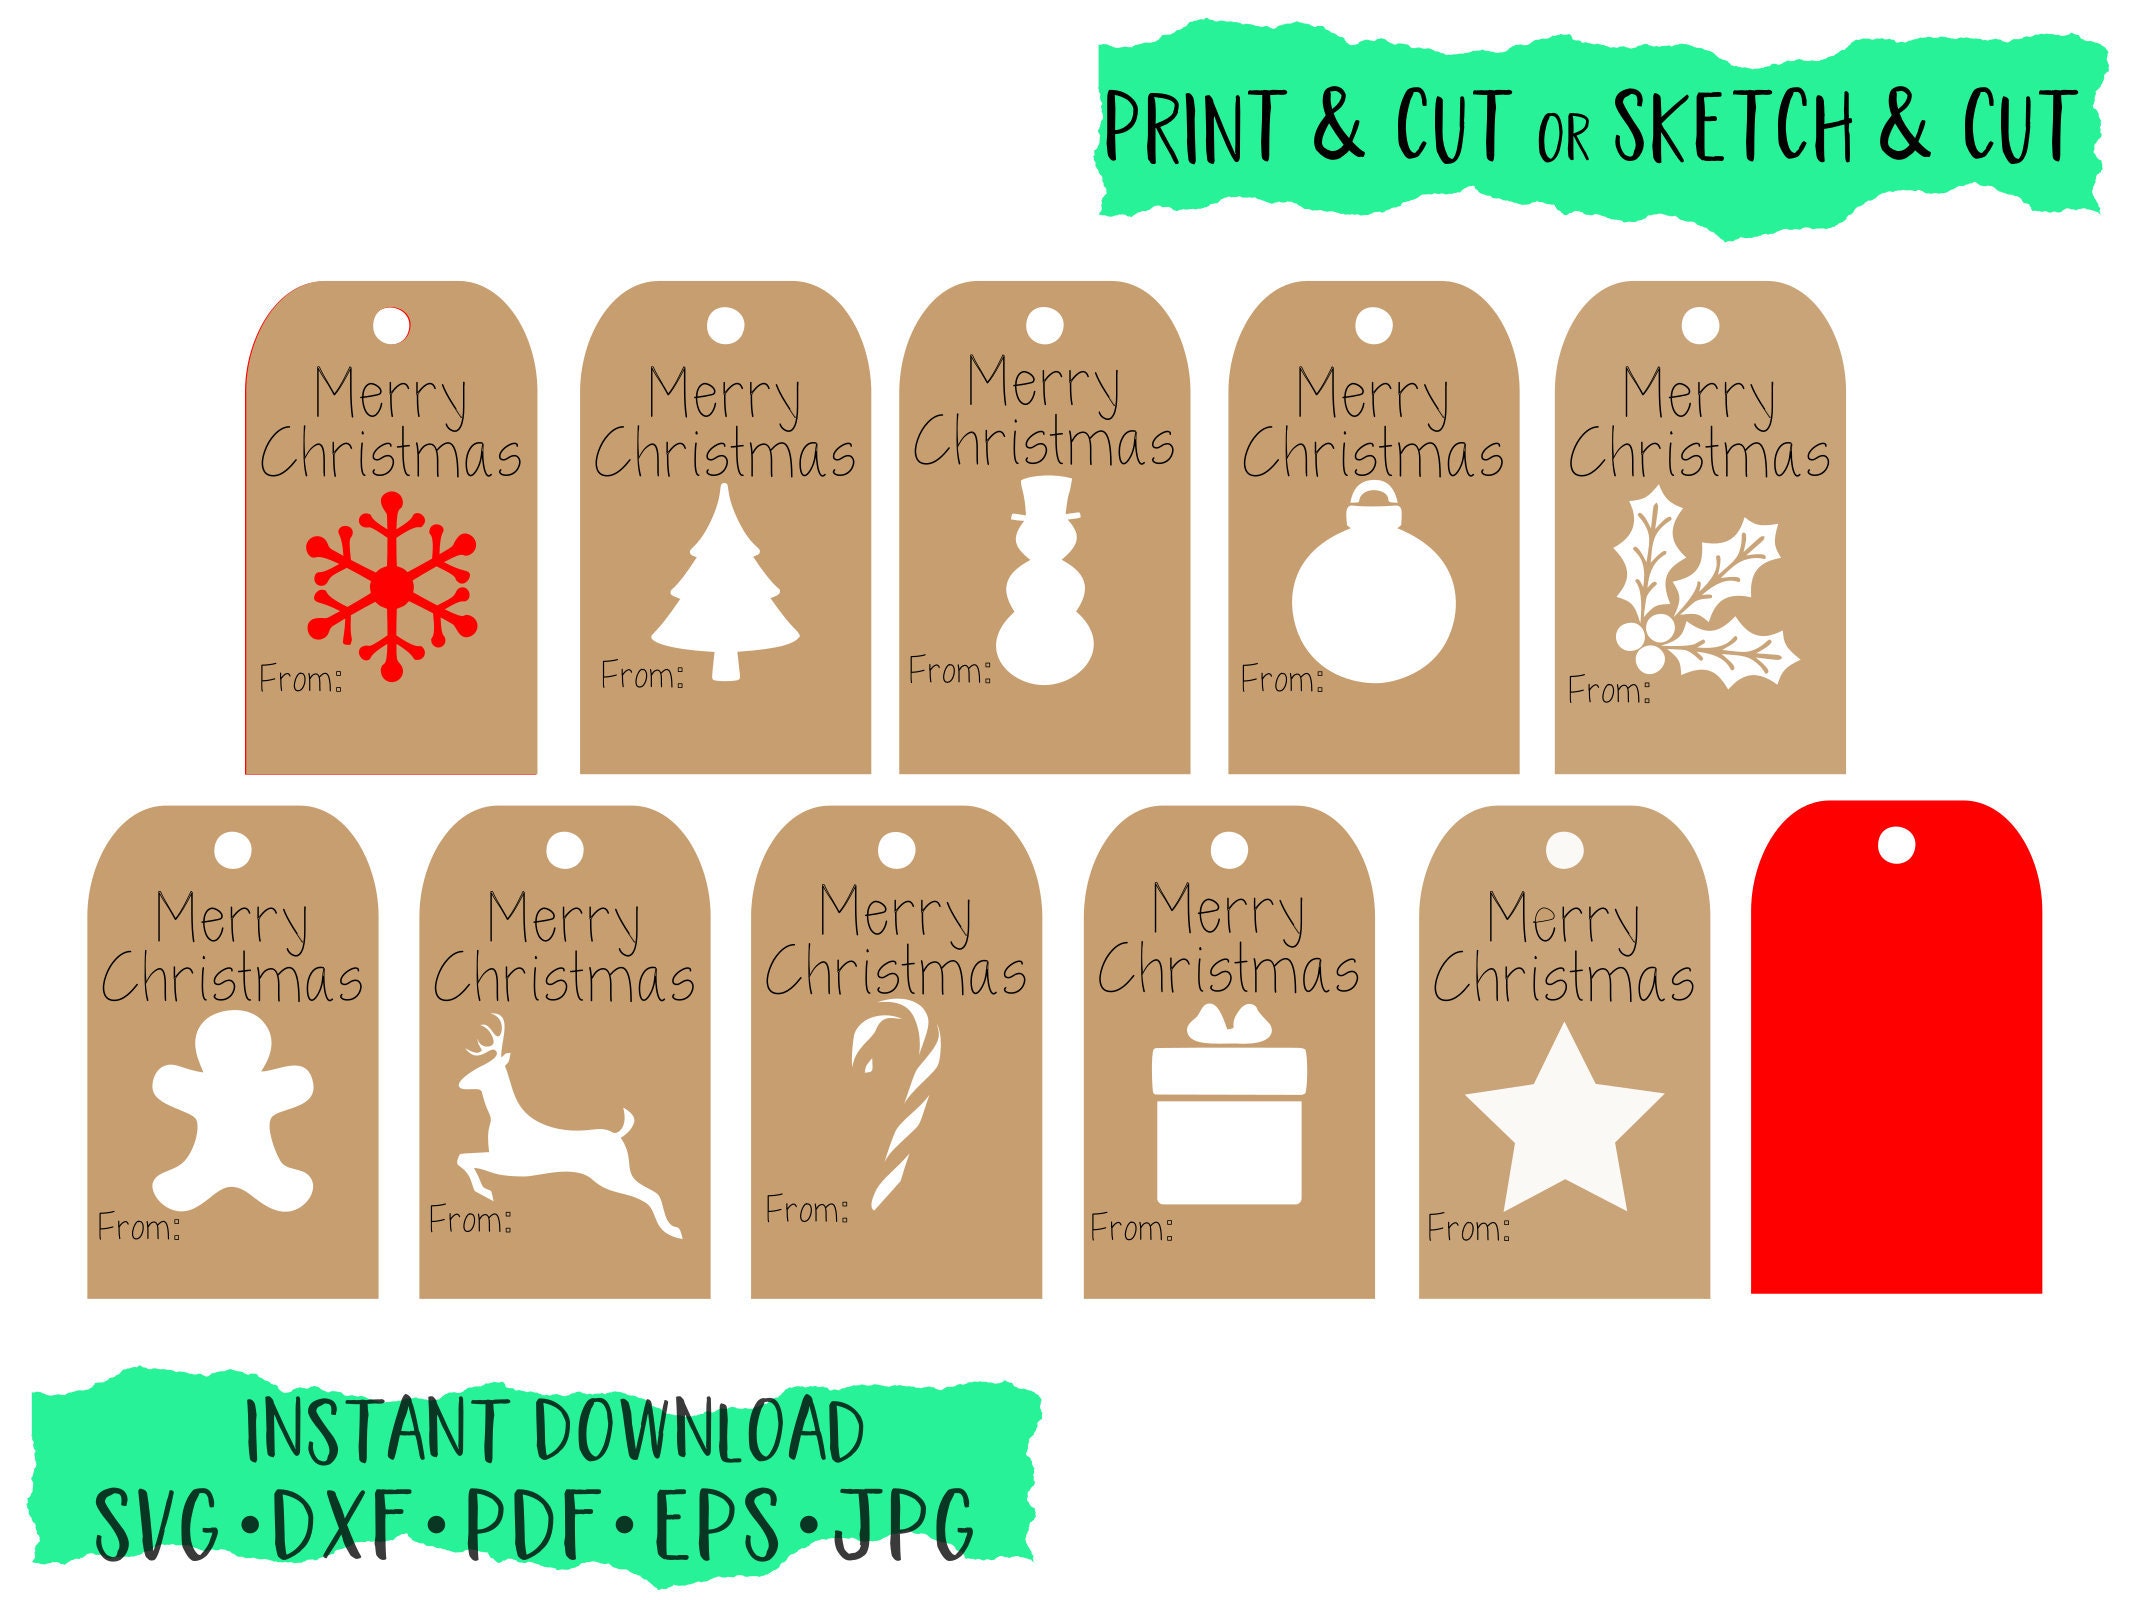 Printable Christmas Gift Tags: Simplify The Season - A Touch of LA